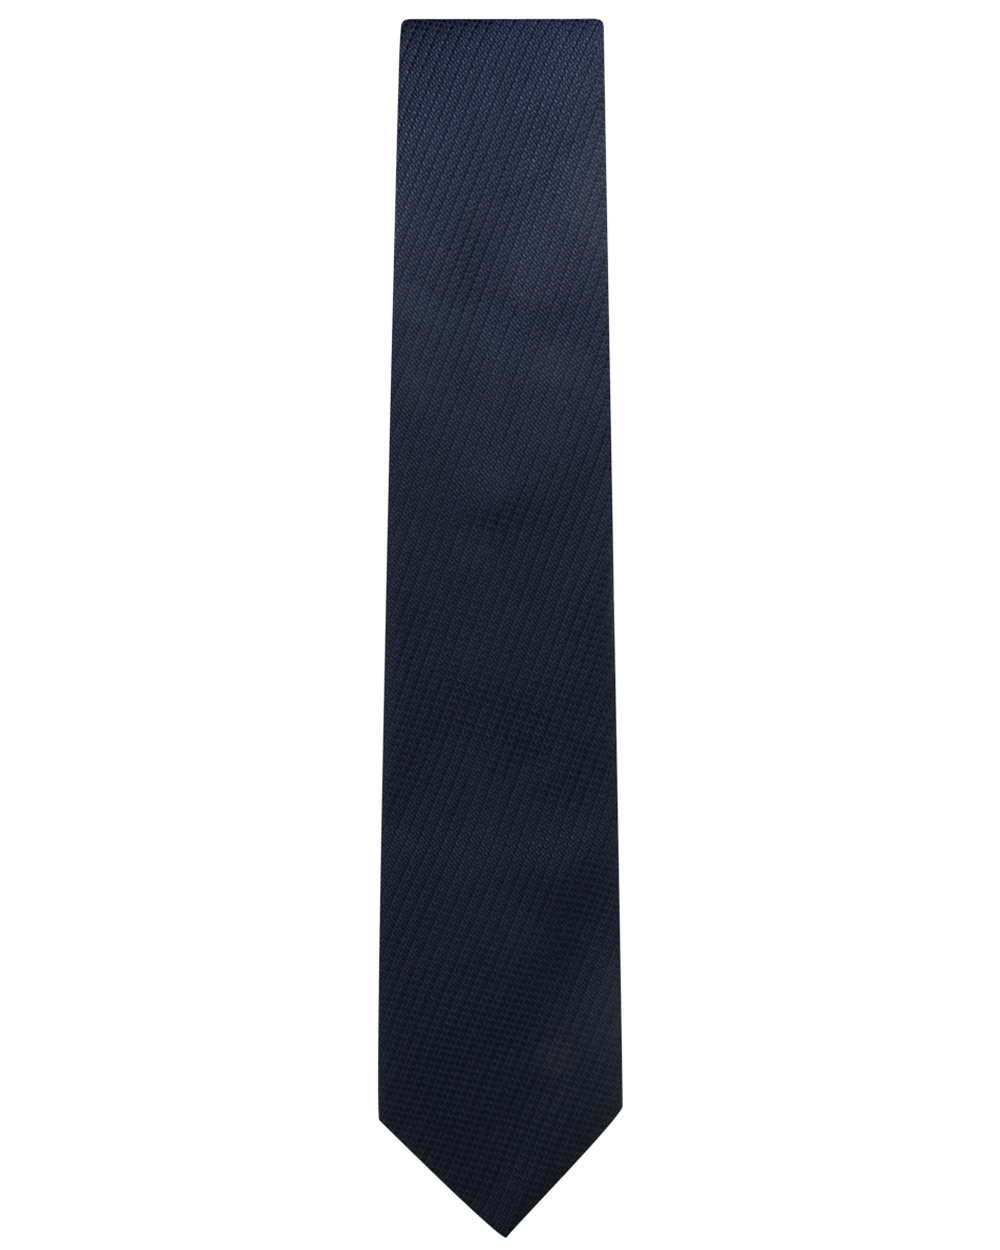 Midnight Blue Jacquard Tie